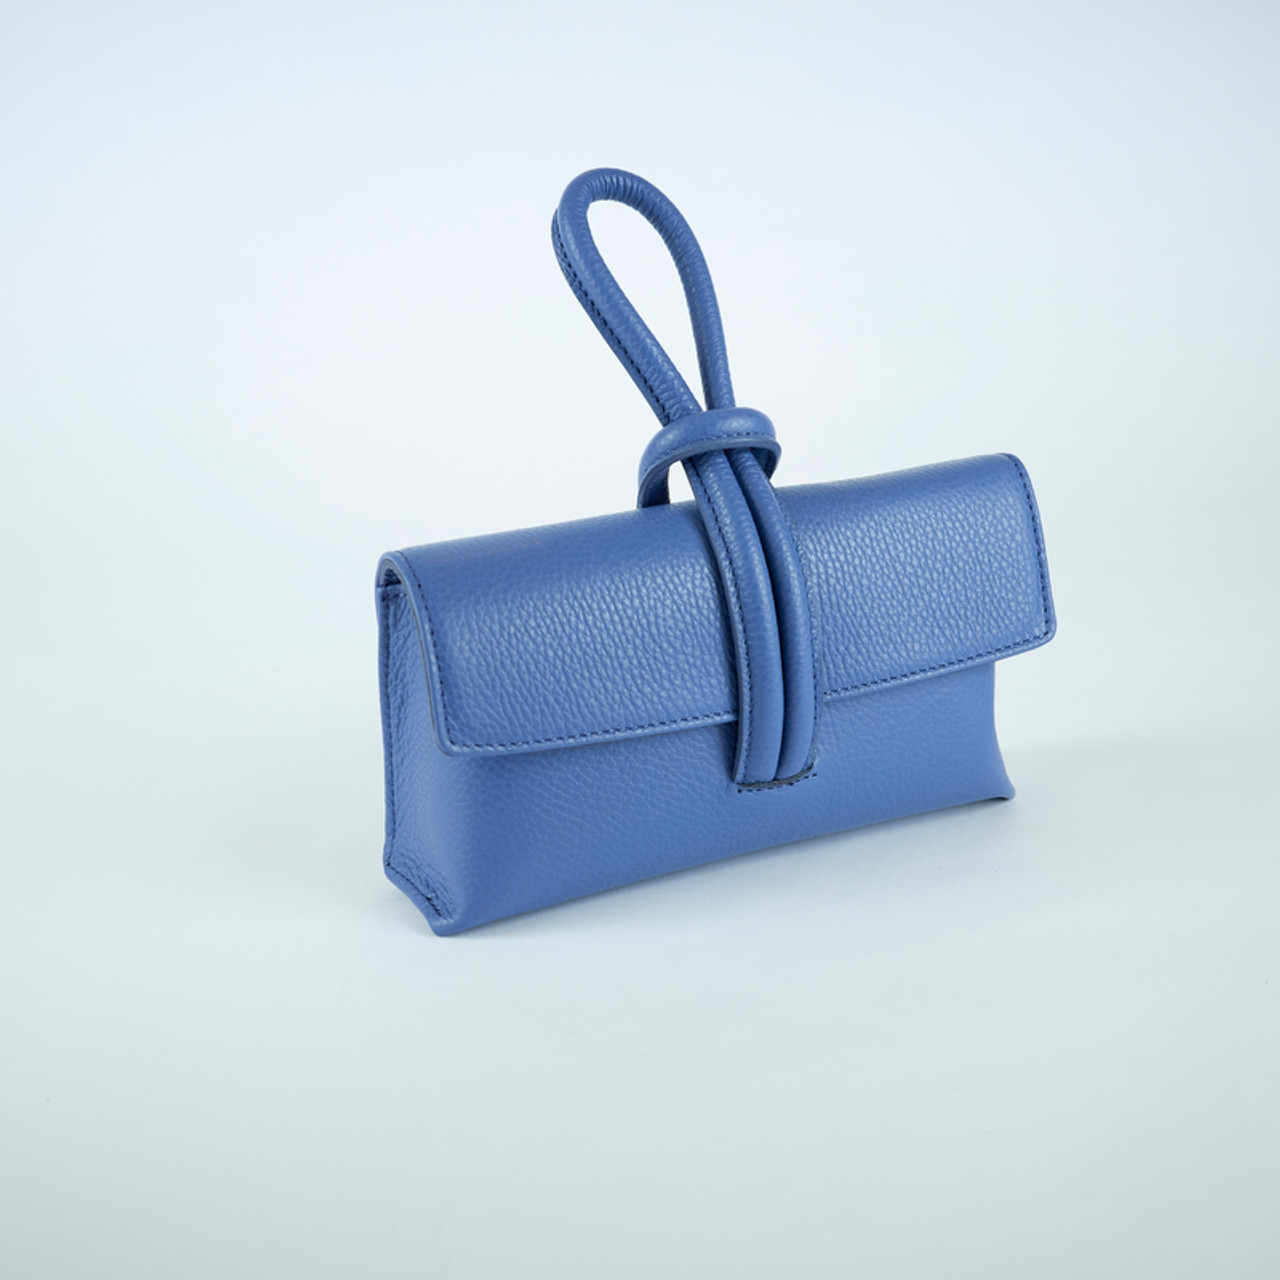 Italian Leather Clutch/Crossbody Bag - Periwinkle Blue